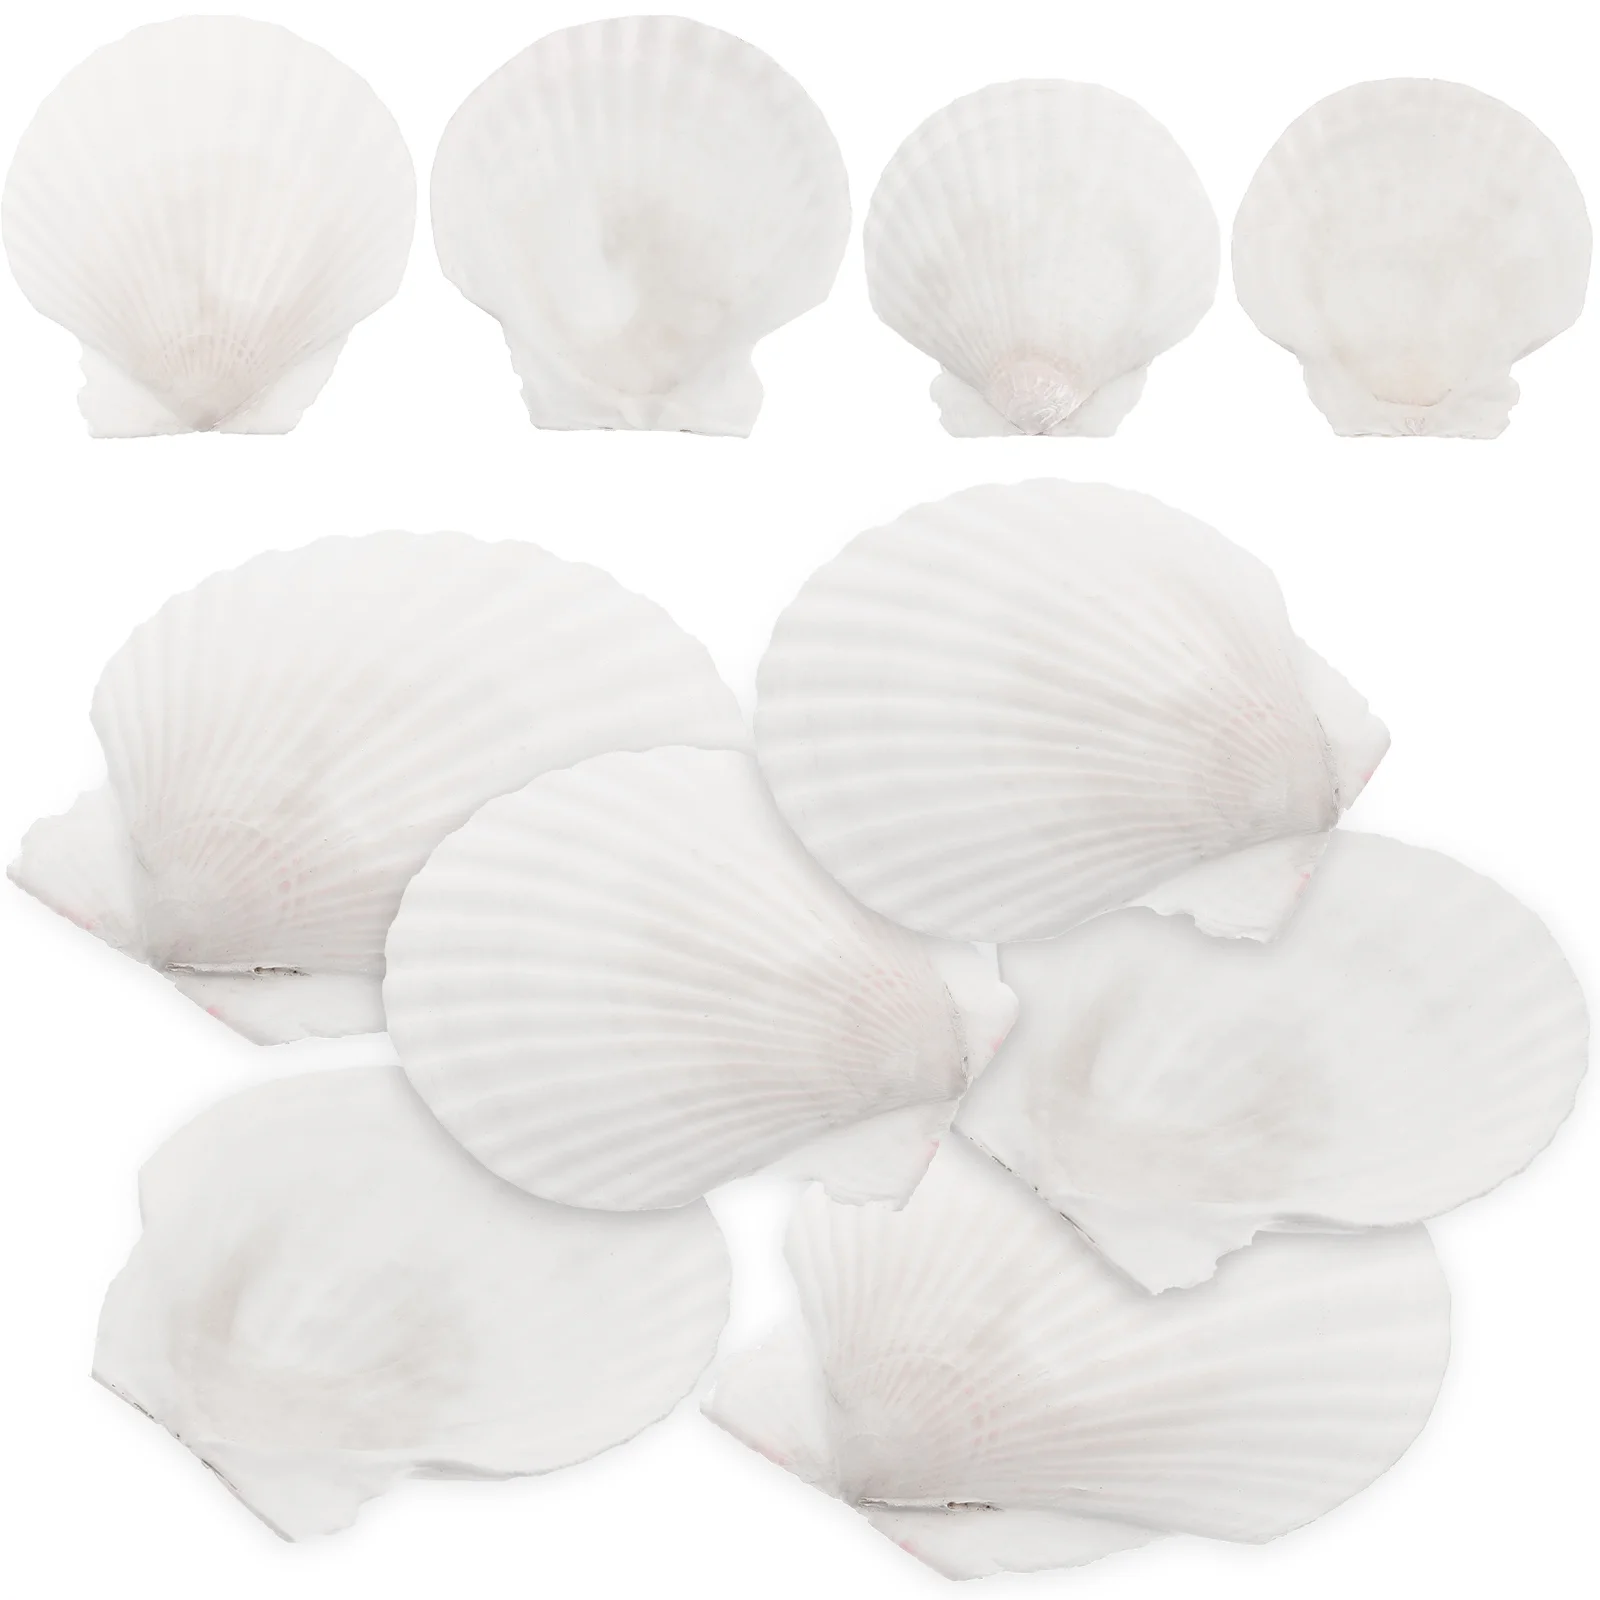 

Shell Shells Seashells Crafts Natural Decor Scallops Nautical Tank Ornament Conch Sea Christmas Diy Ornaments Scallop Adornment